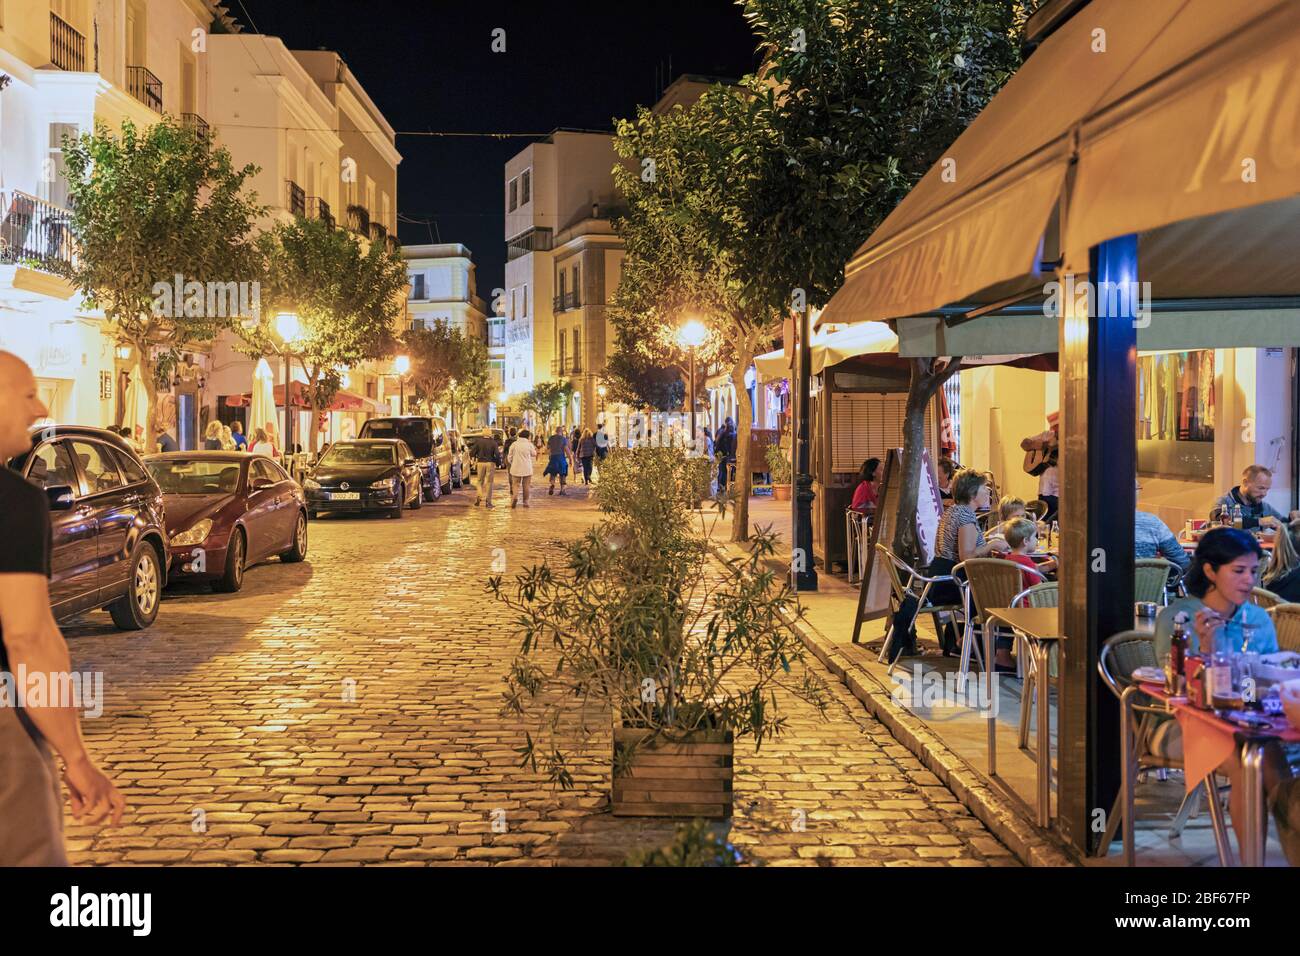 Street scene at night. People dining at sidewalk restaurants.  Tarifa, Costa de la Luz, Cadiz Province, Andalusia, southern Spain. Stock Photo